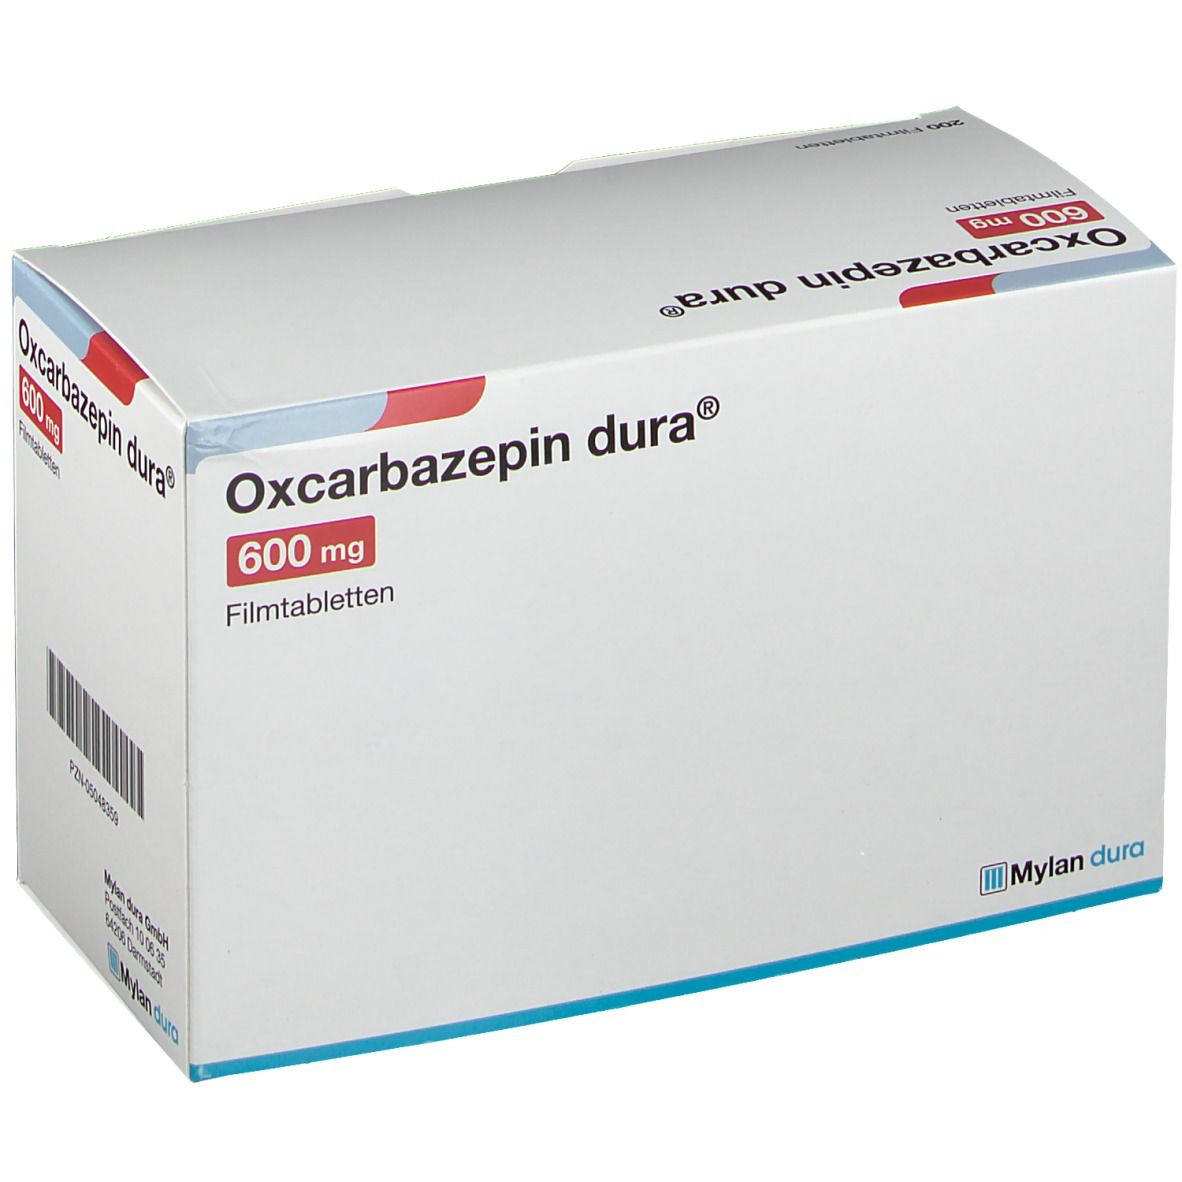 Oxcarbazepin dura® 600 mg